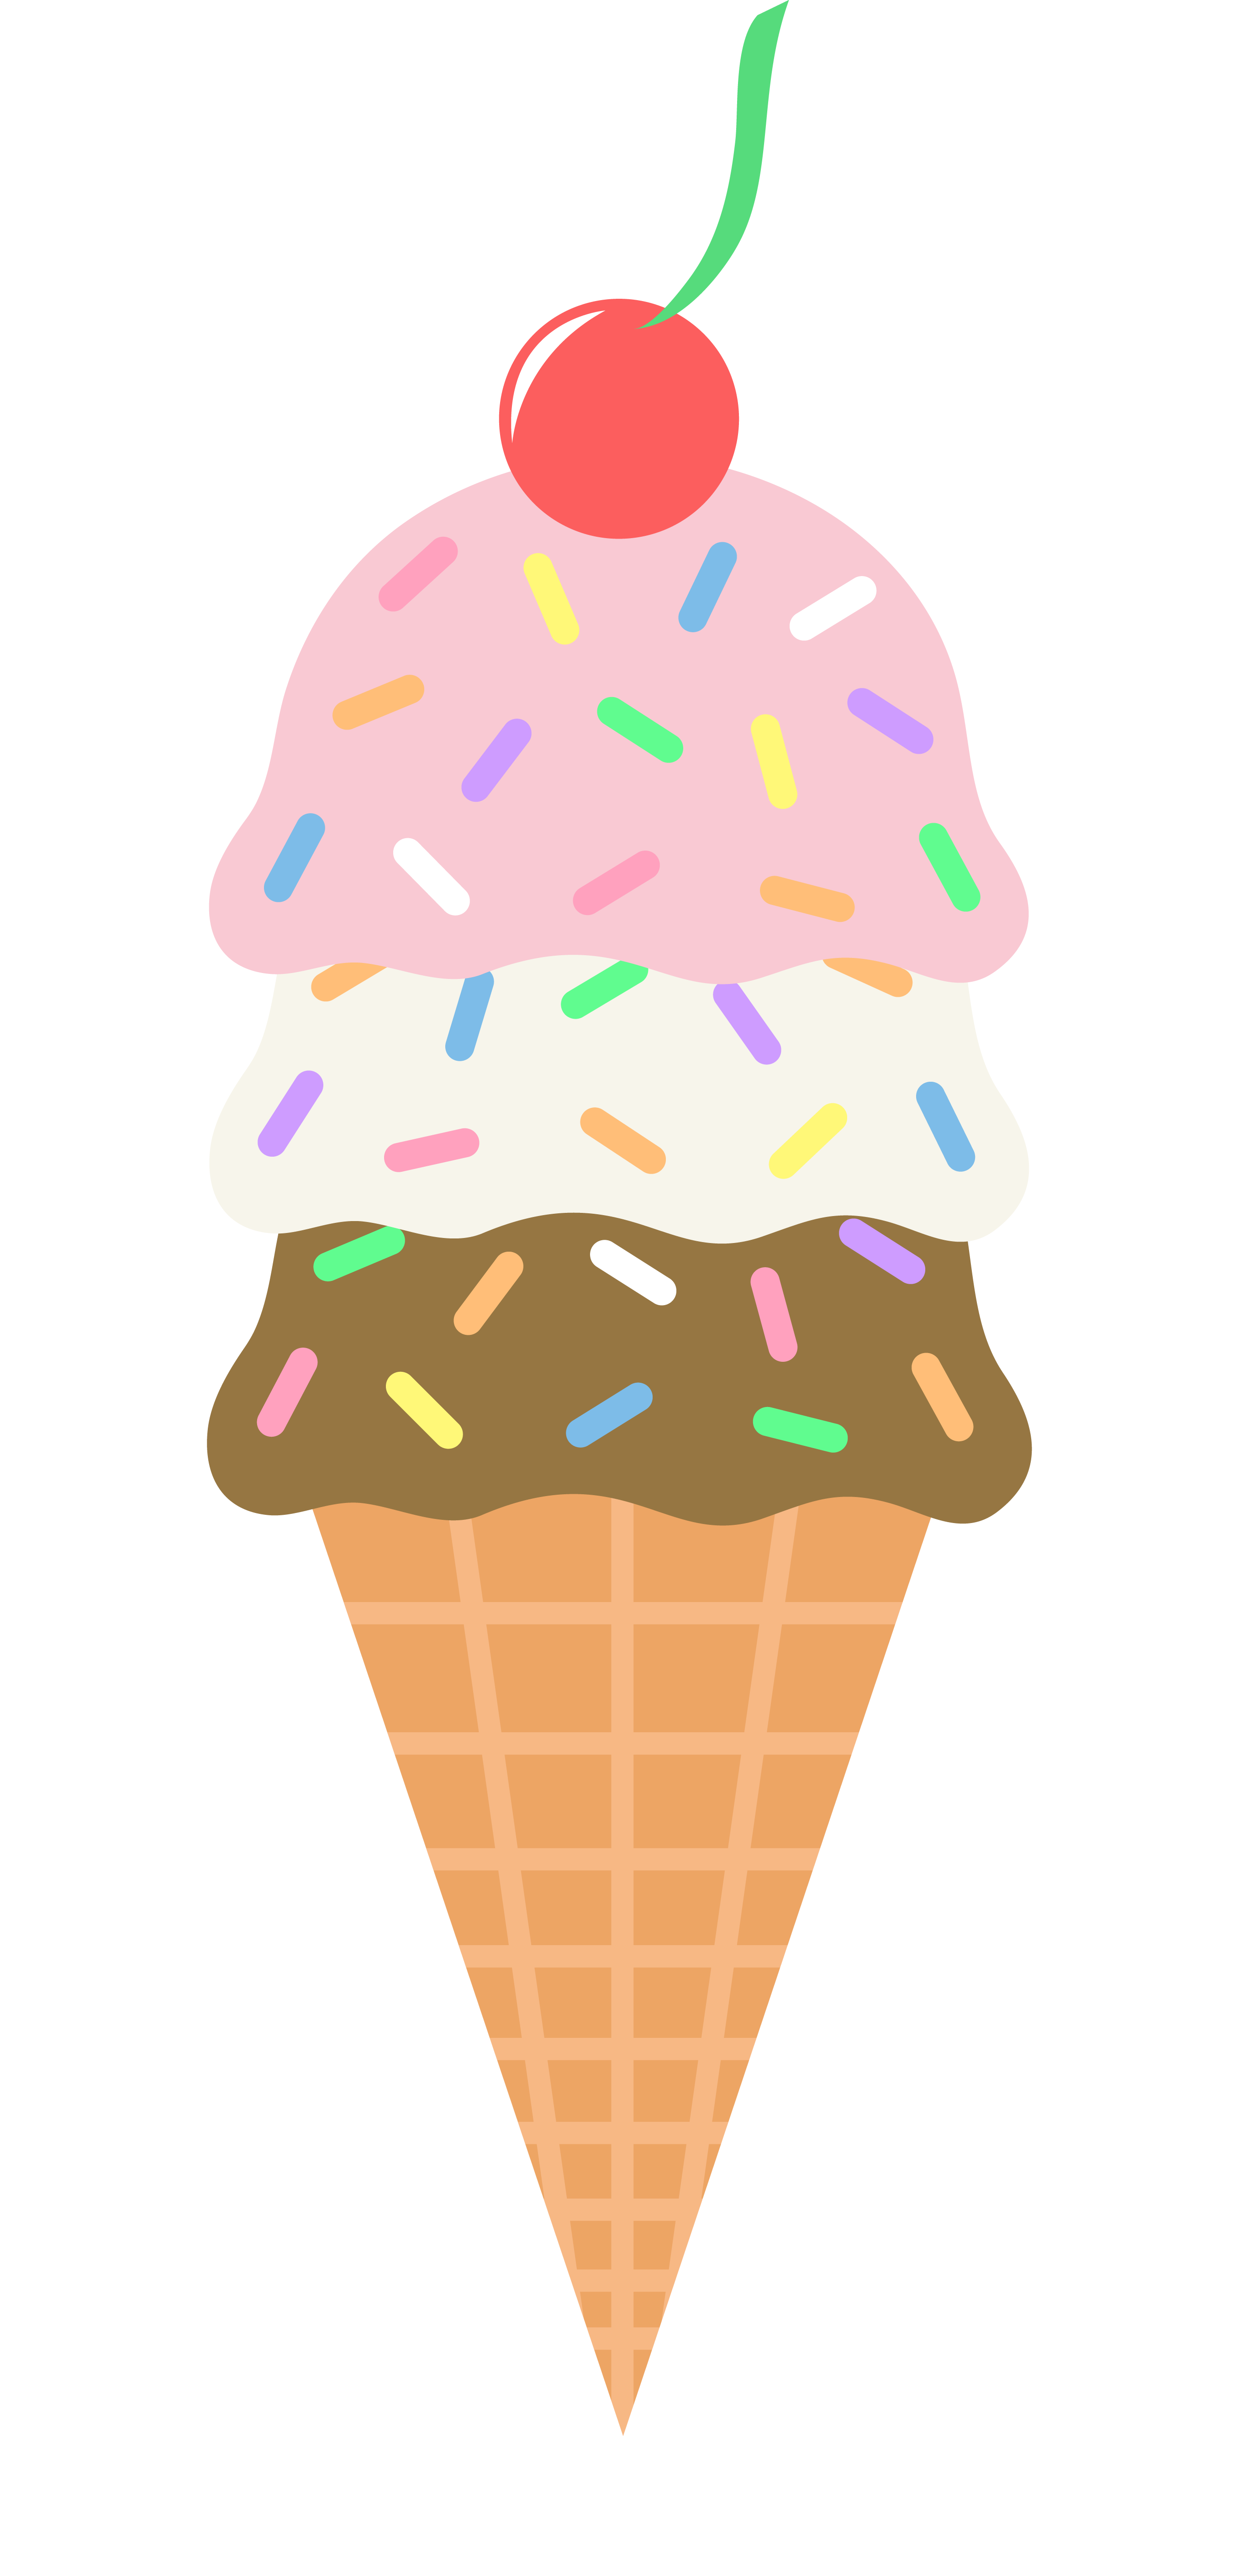 Neapolitan Ice Cream Cone With Sprinkles - Free Clip Art